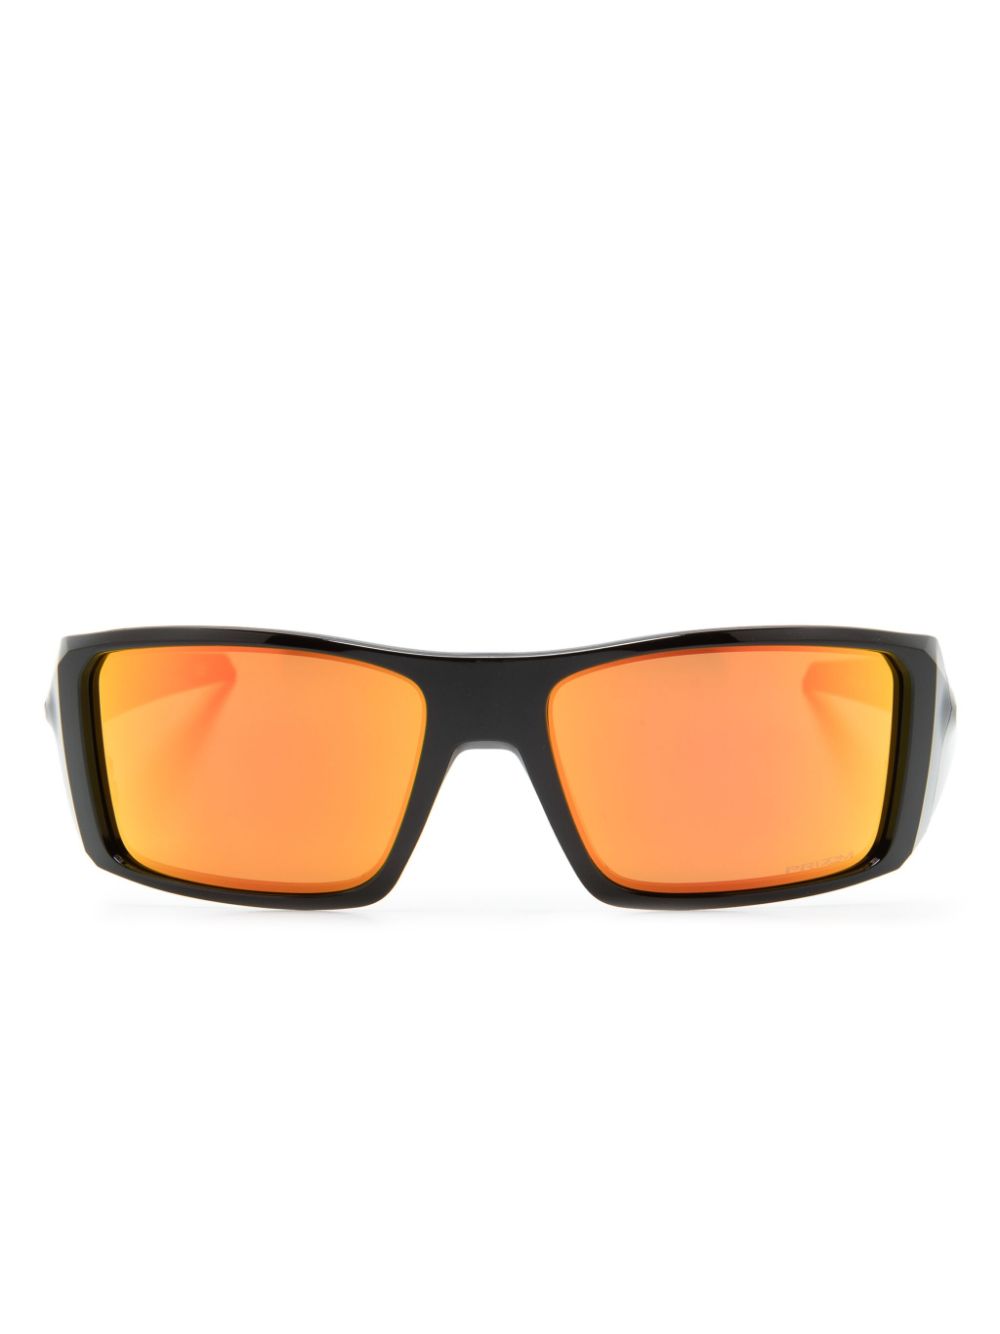 Heliostat wraparound-frame sunglasses<BR/><BR/>